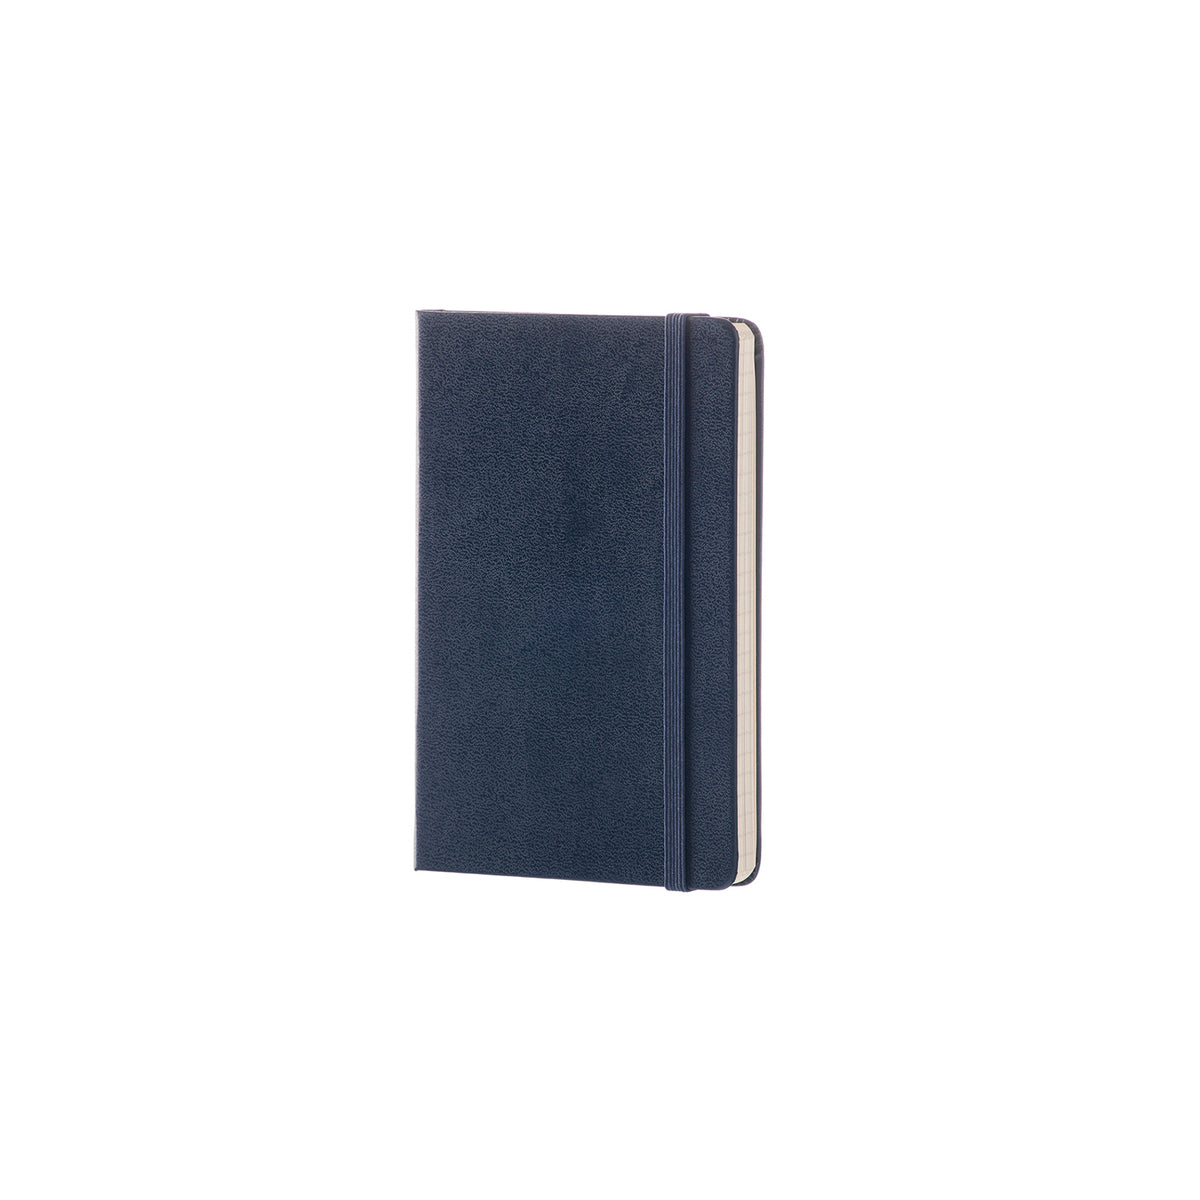 Moleskine - Classic Hard Cover Notebook - Ruled - Pocket - Sapphire Blue